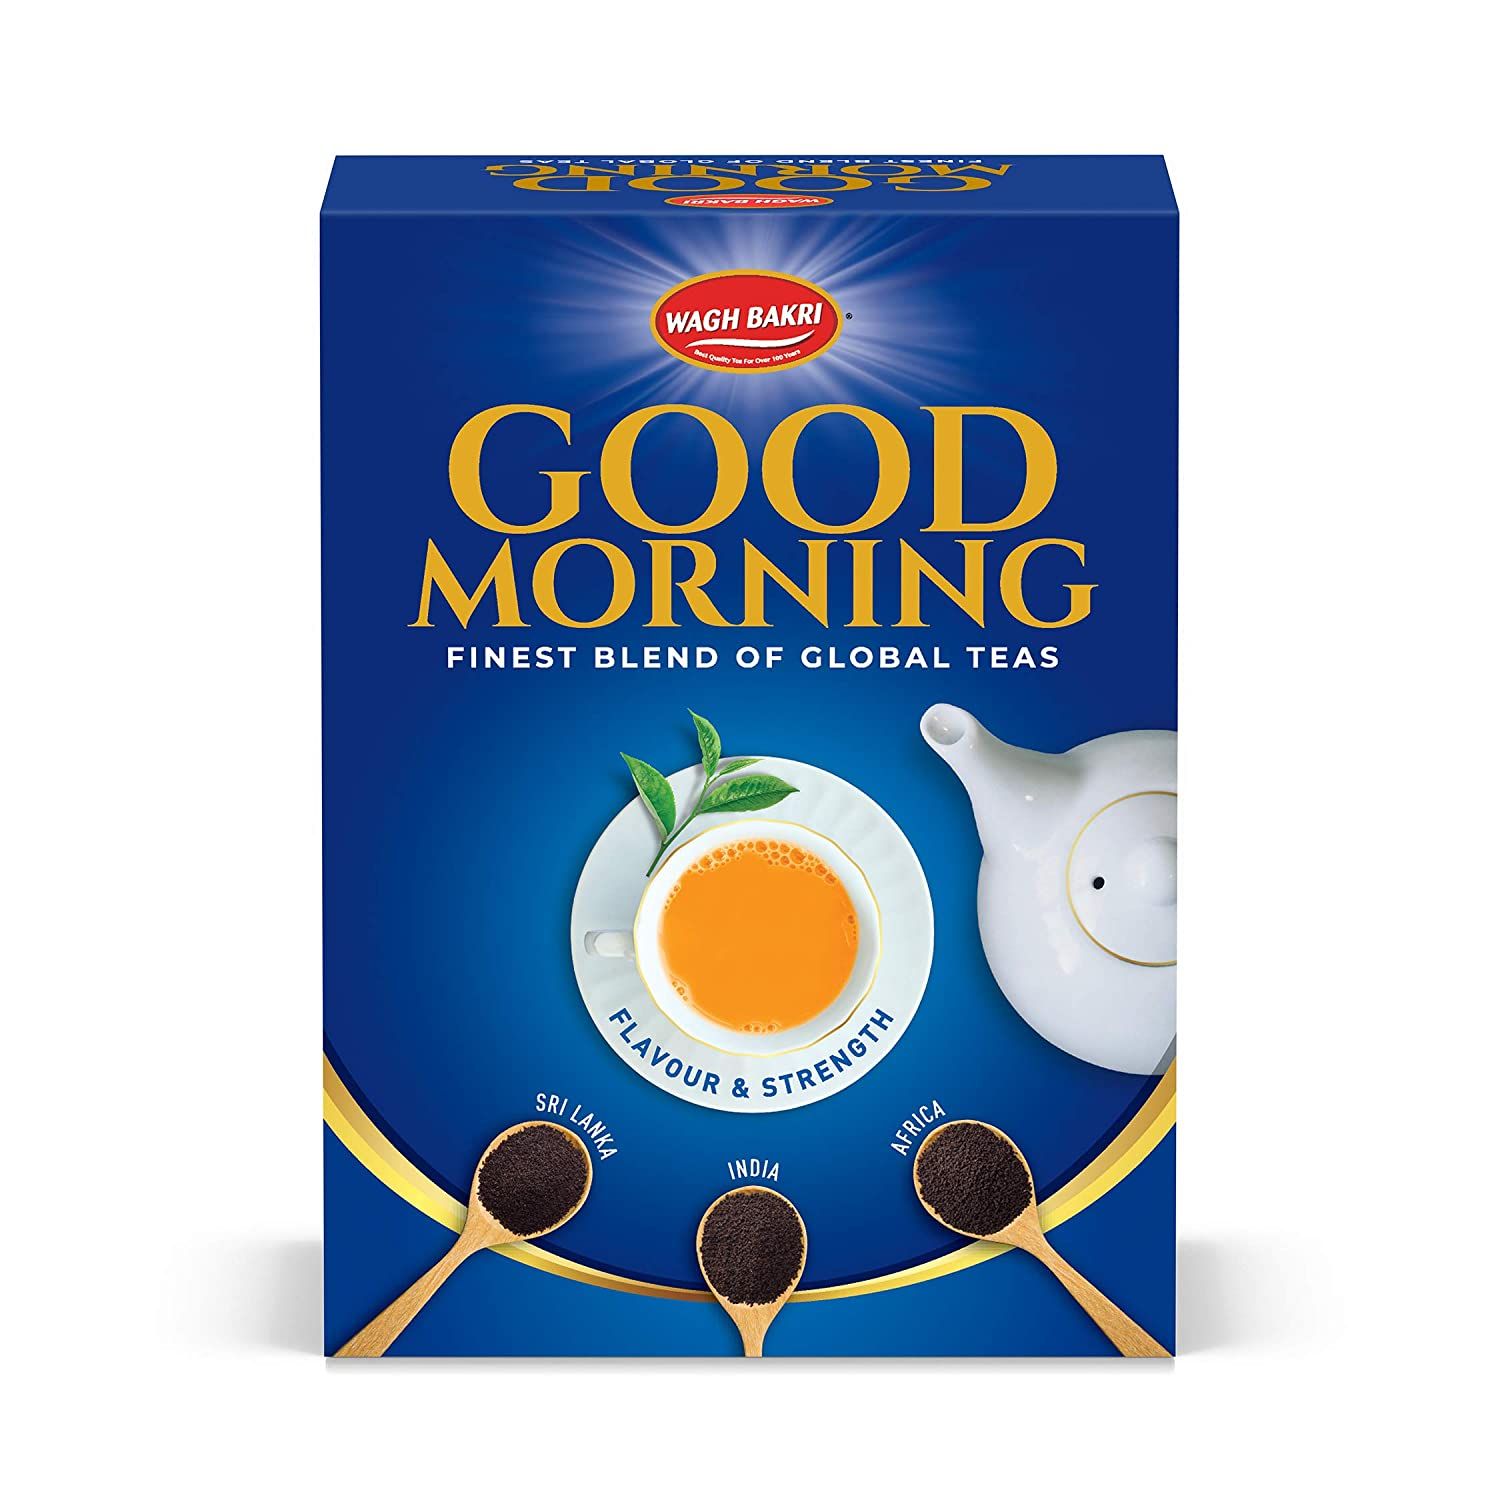 Wagh Bakri Good Morning Carton Pack Image